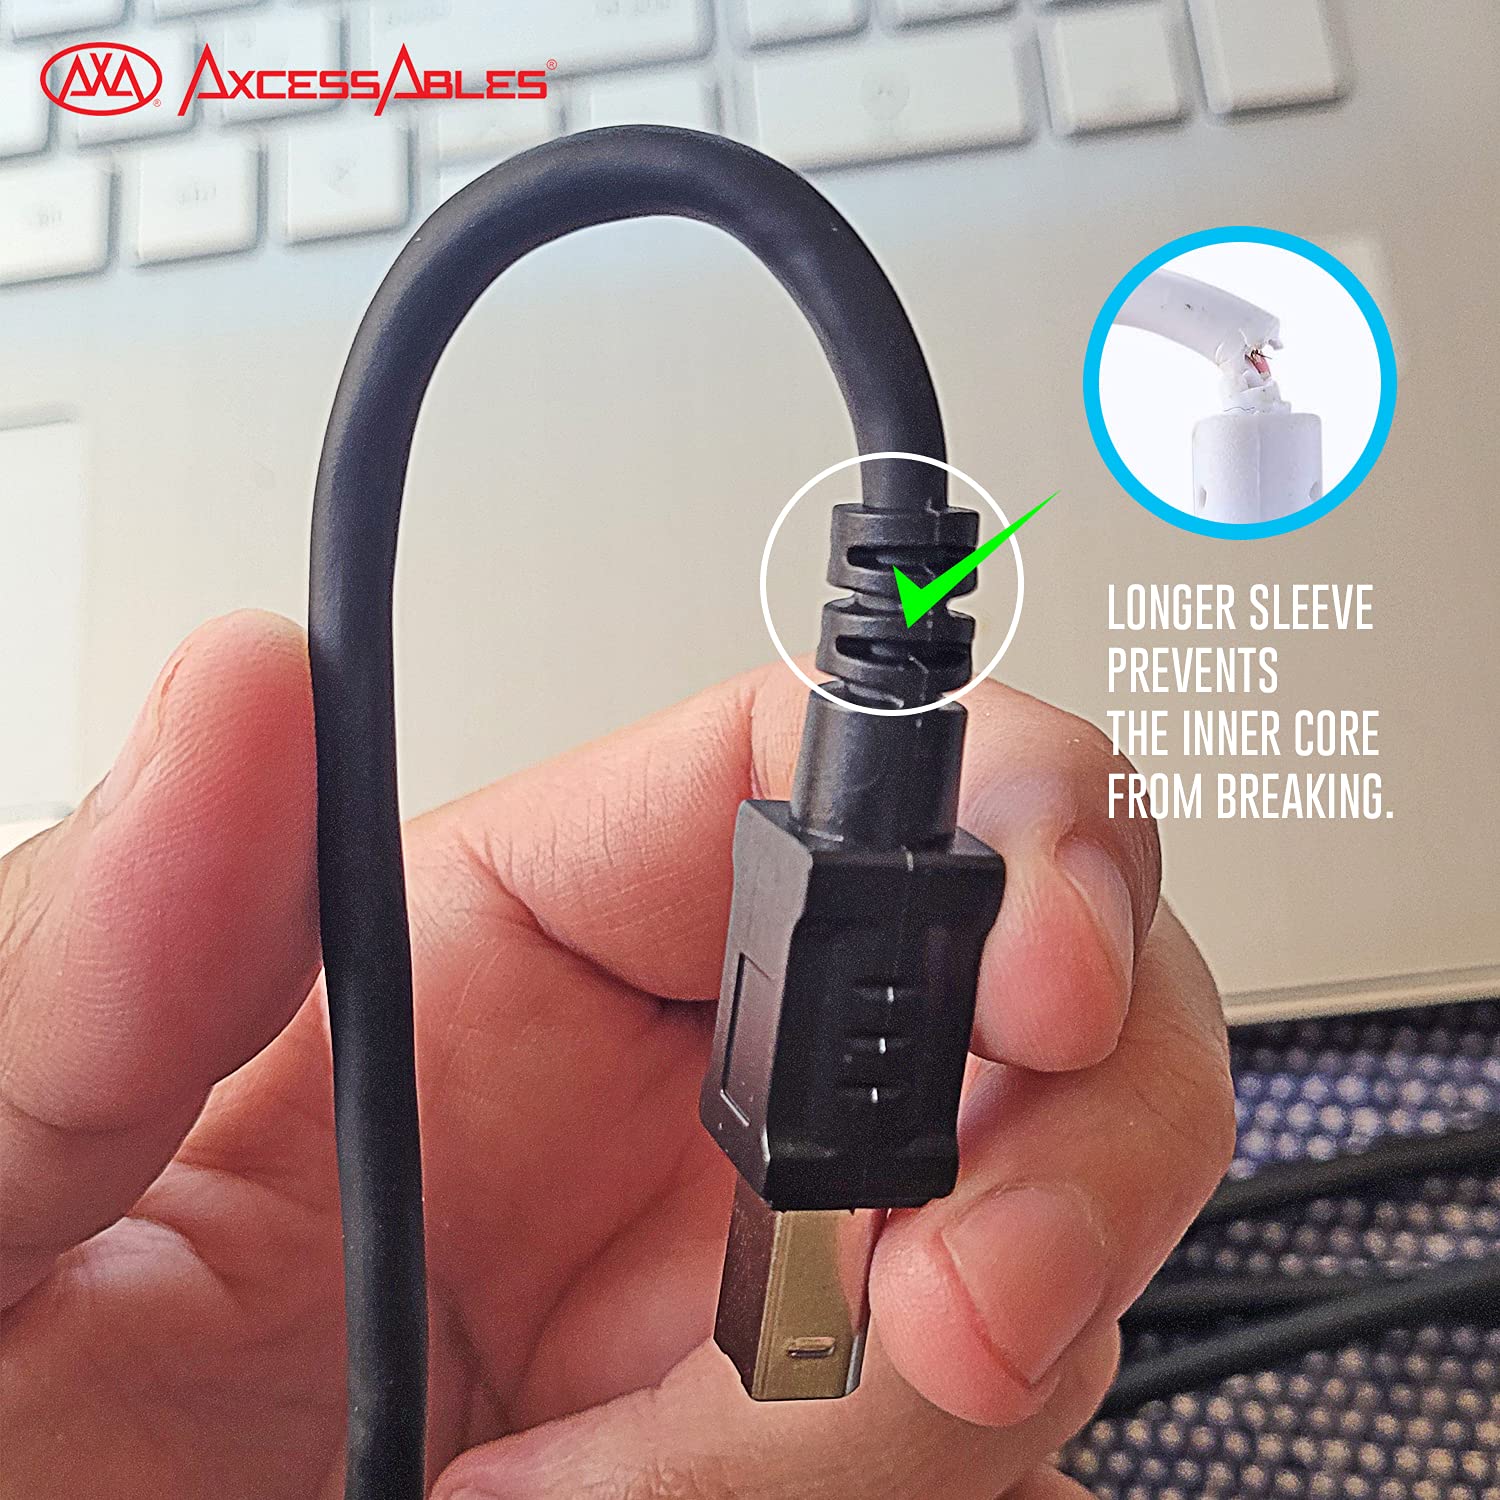 AxcessAbles USB 2.0 A Male to B Male USB Cord (5 feet)  2PK